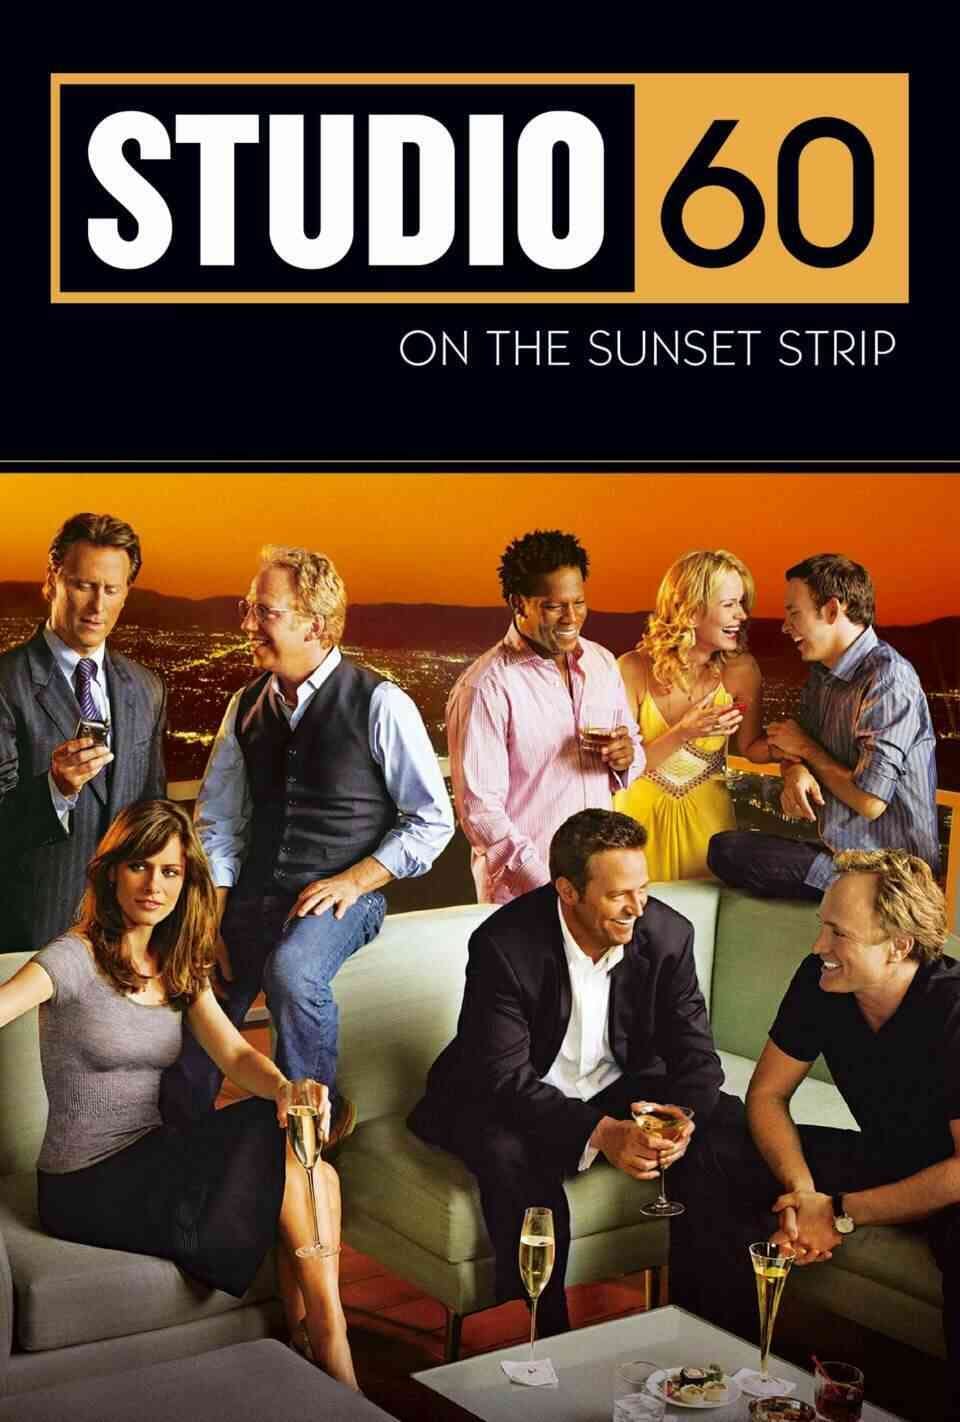 Read Studio 60 on the Sunset Strip screenplay.